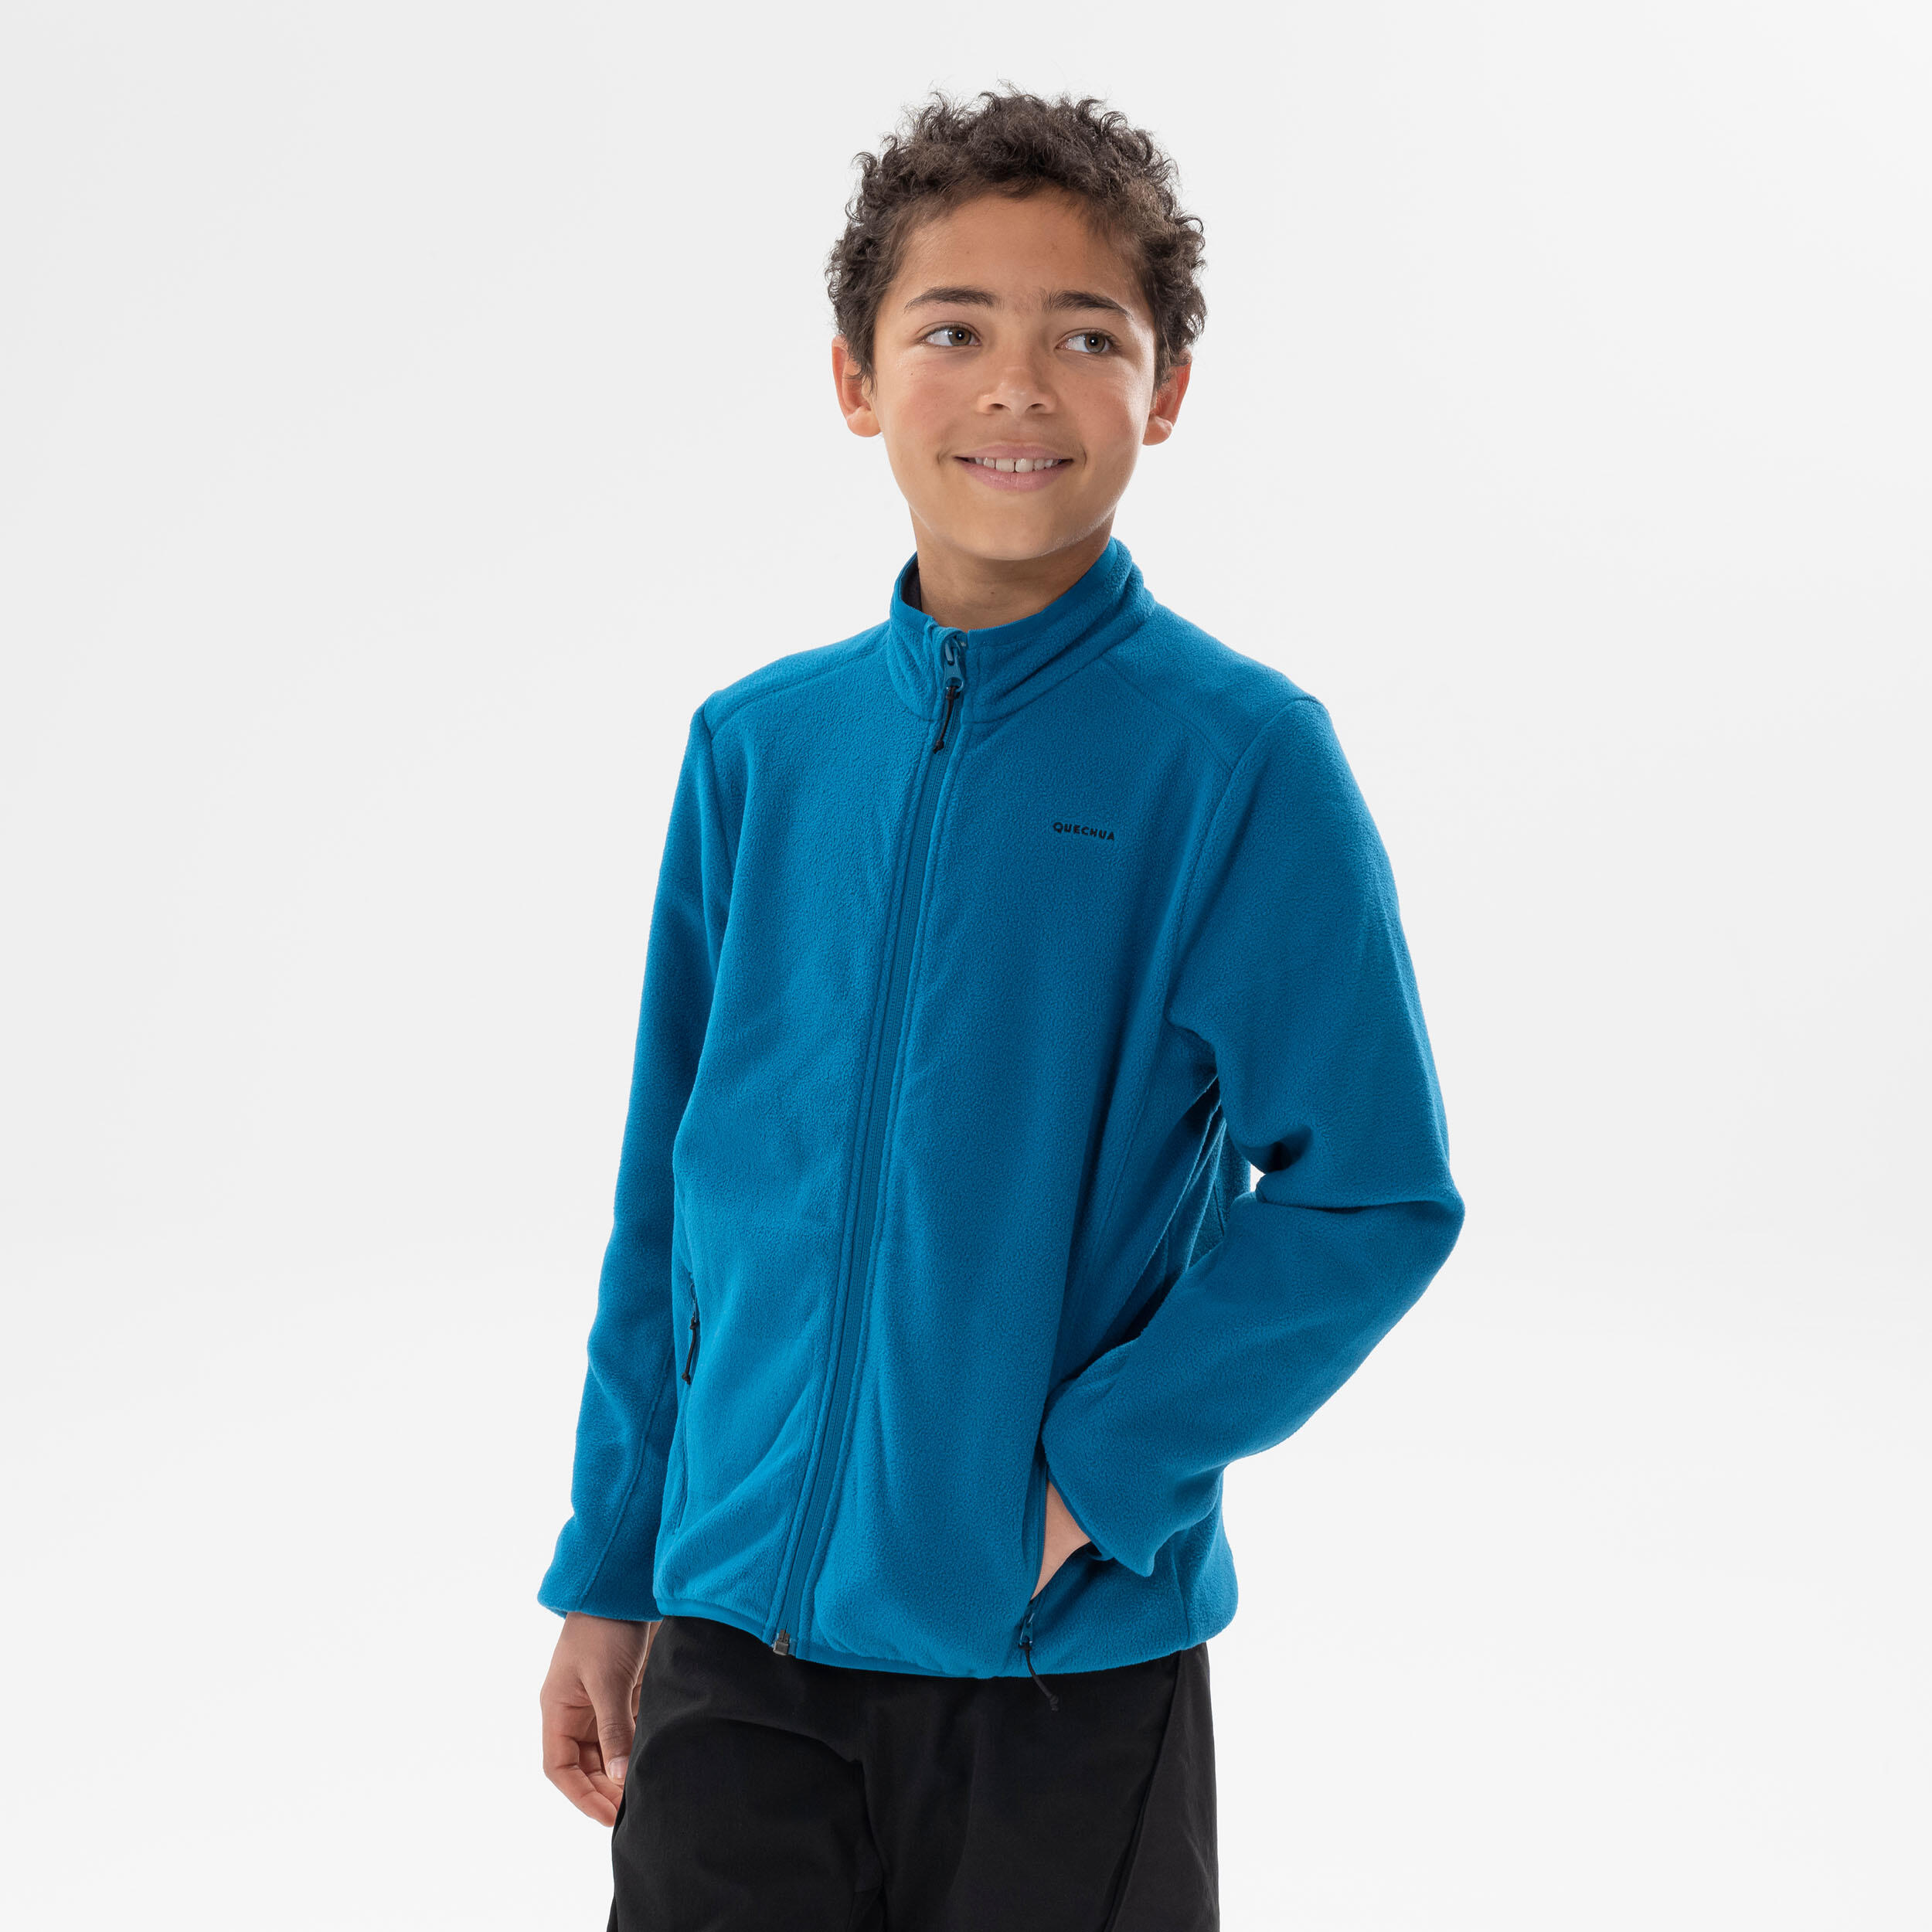 Kids’ Fleece Hiking Jacket - MH 150 - Petrol blue, Carbon grey ...